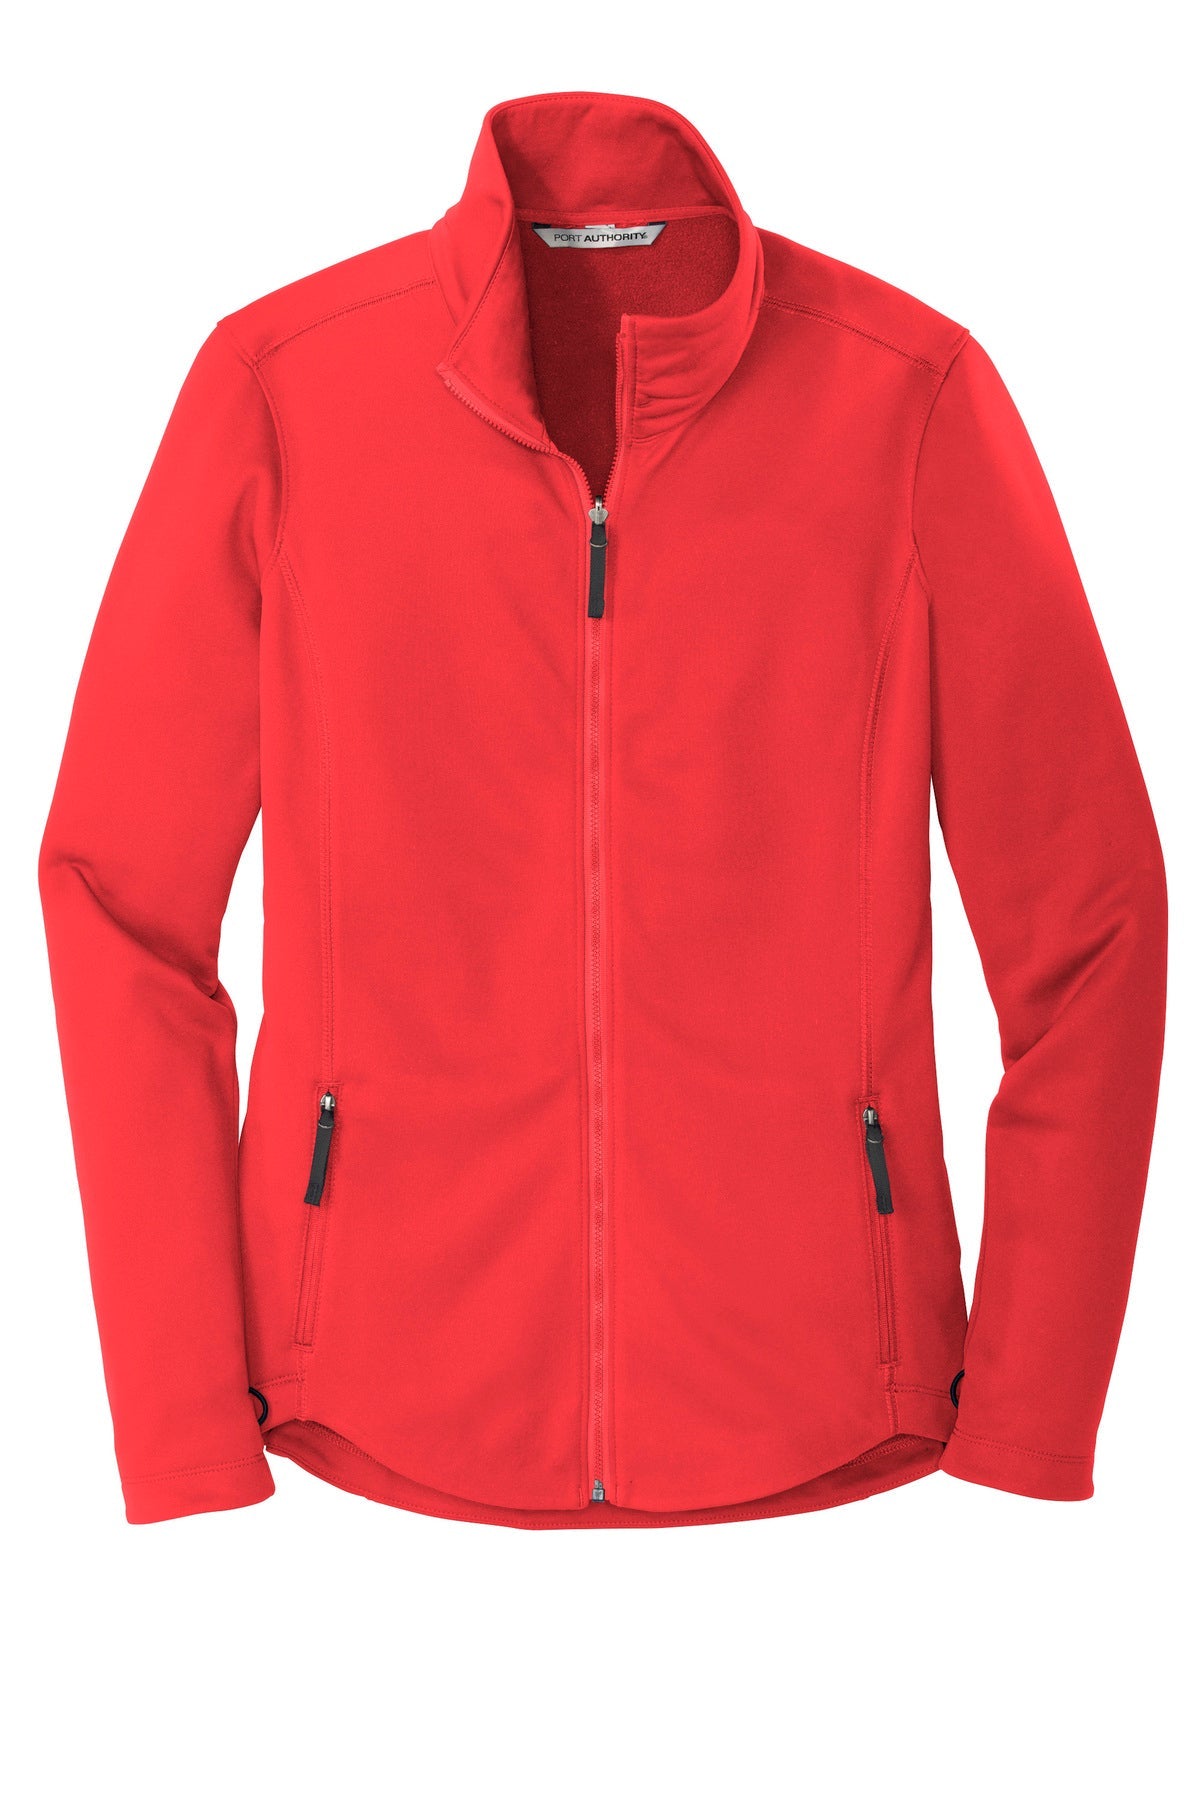 L904 Port Authority ® Ladies Collective Smooth Fleece Jacket